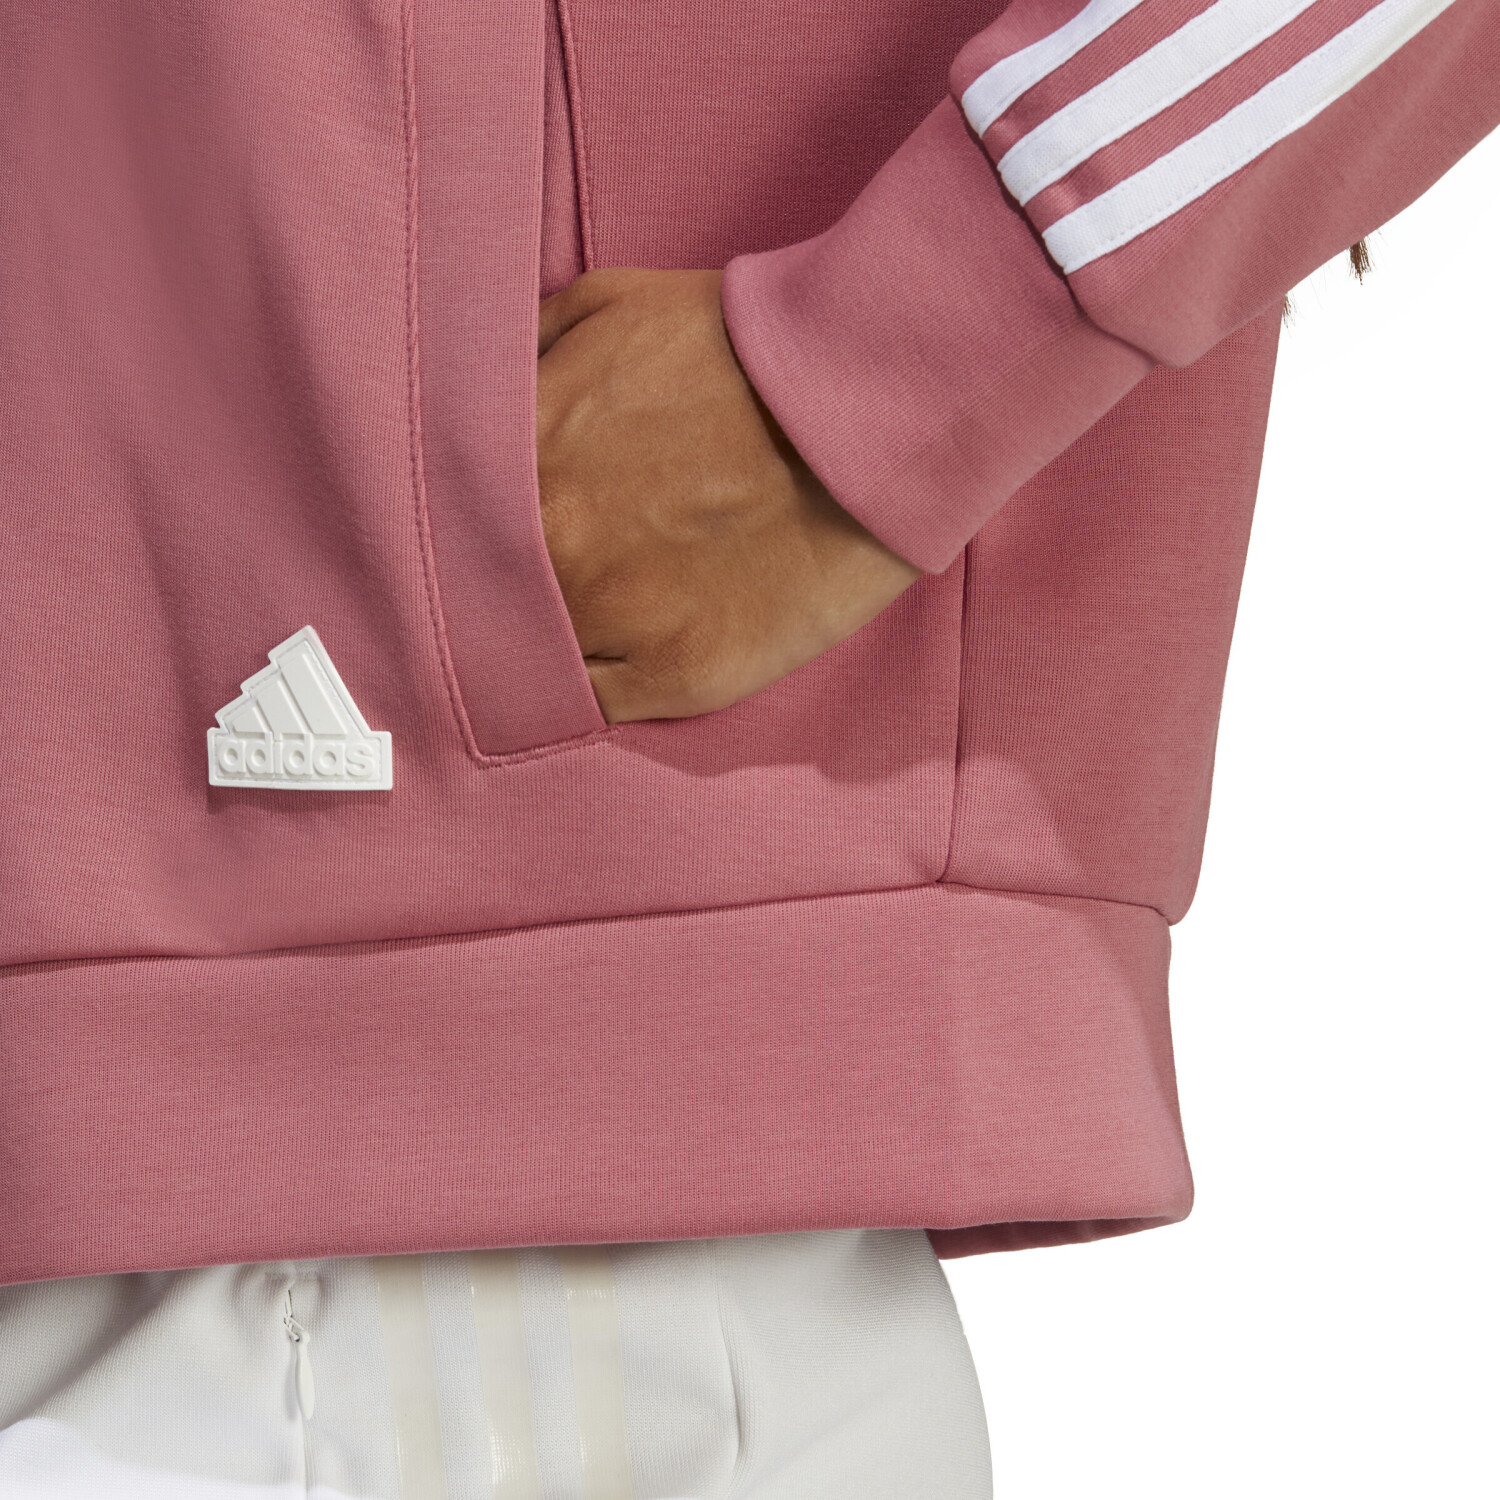 Adidas Future Icons | 3 45,00 ab Stripes bei pink Preisvergleich (IB8513) €